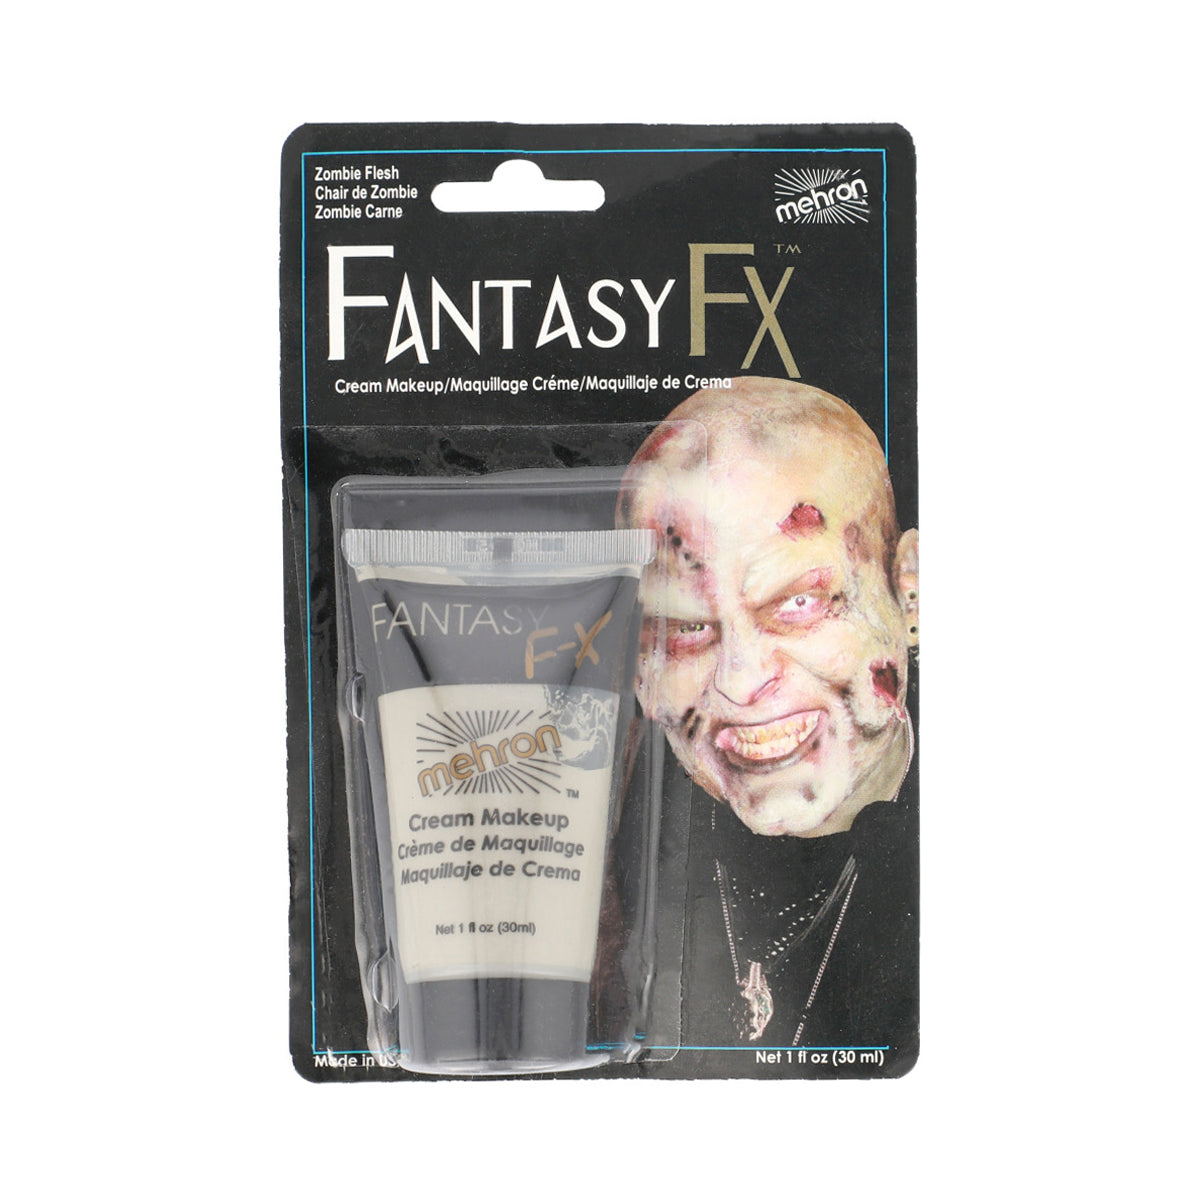 Fantasy FX Makeup - Zombie Flesh